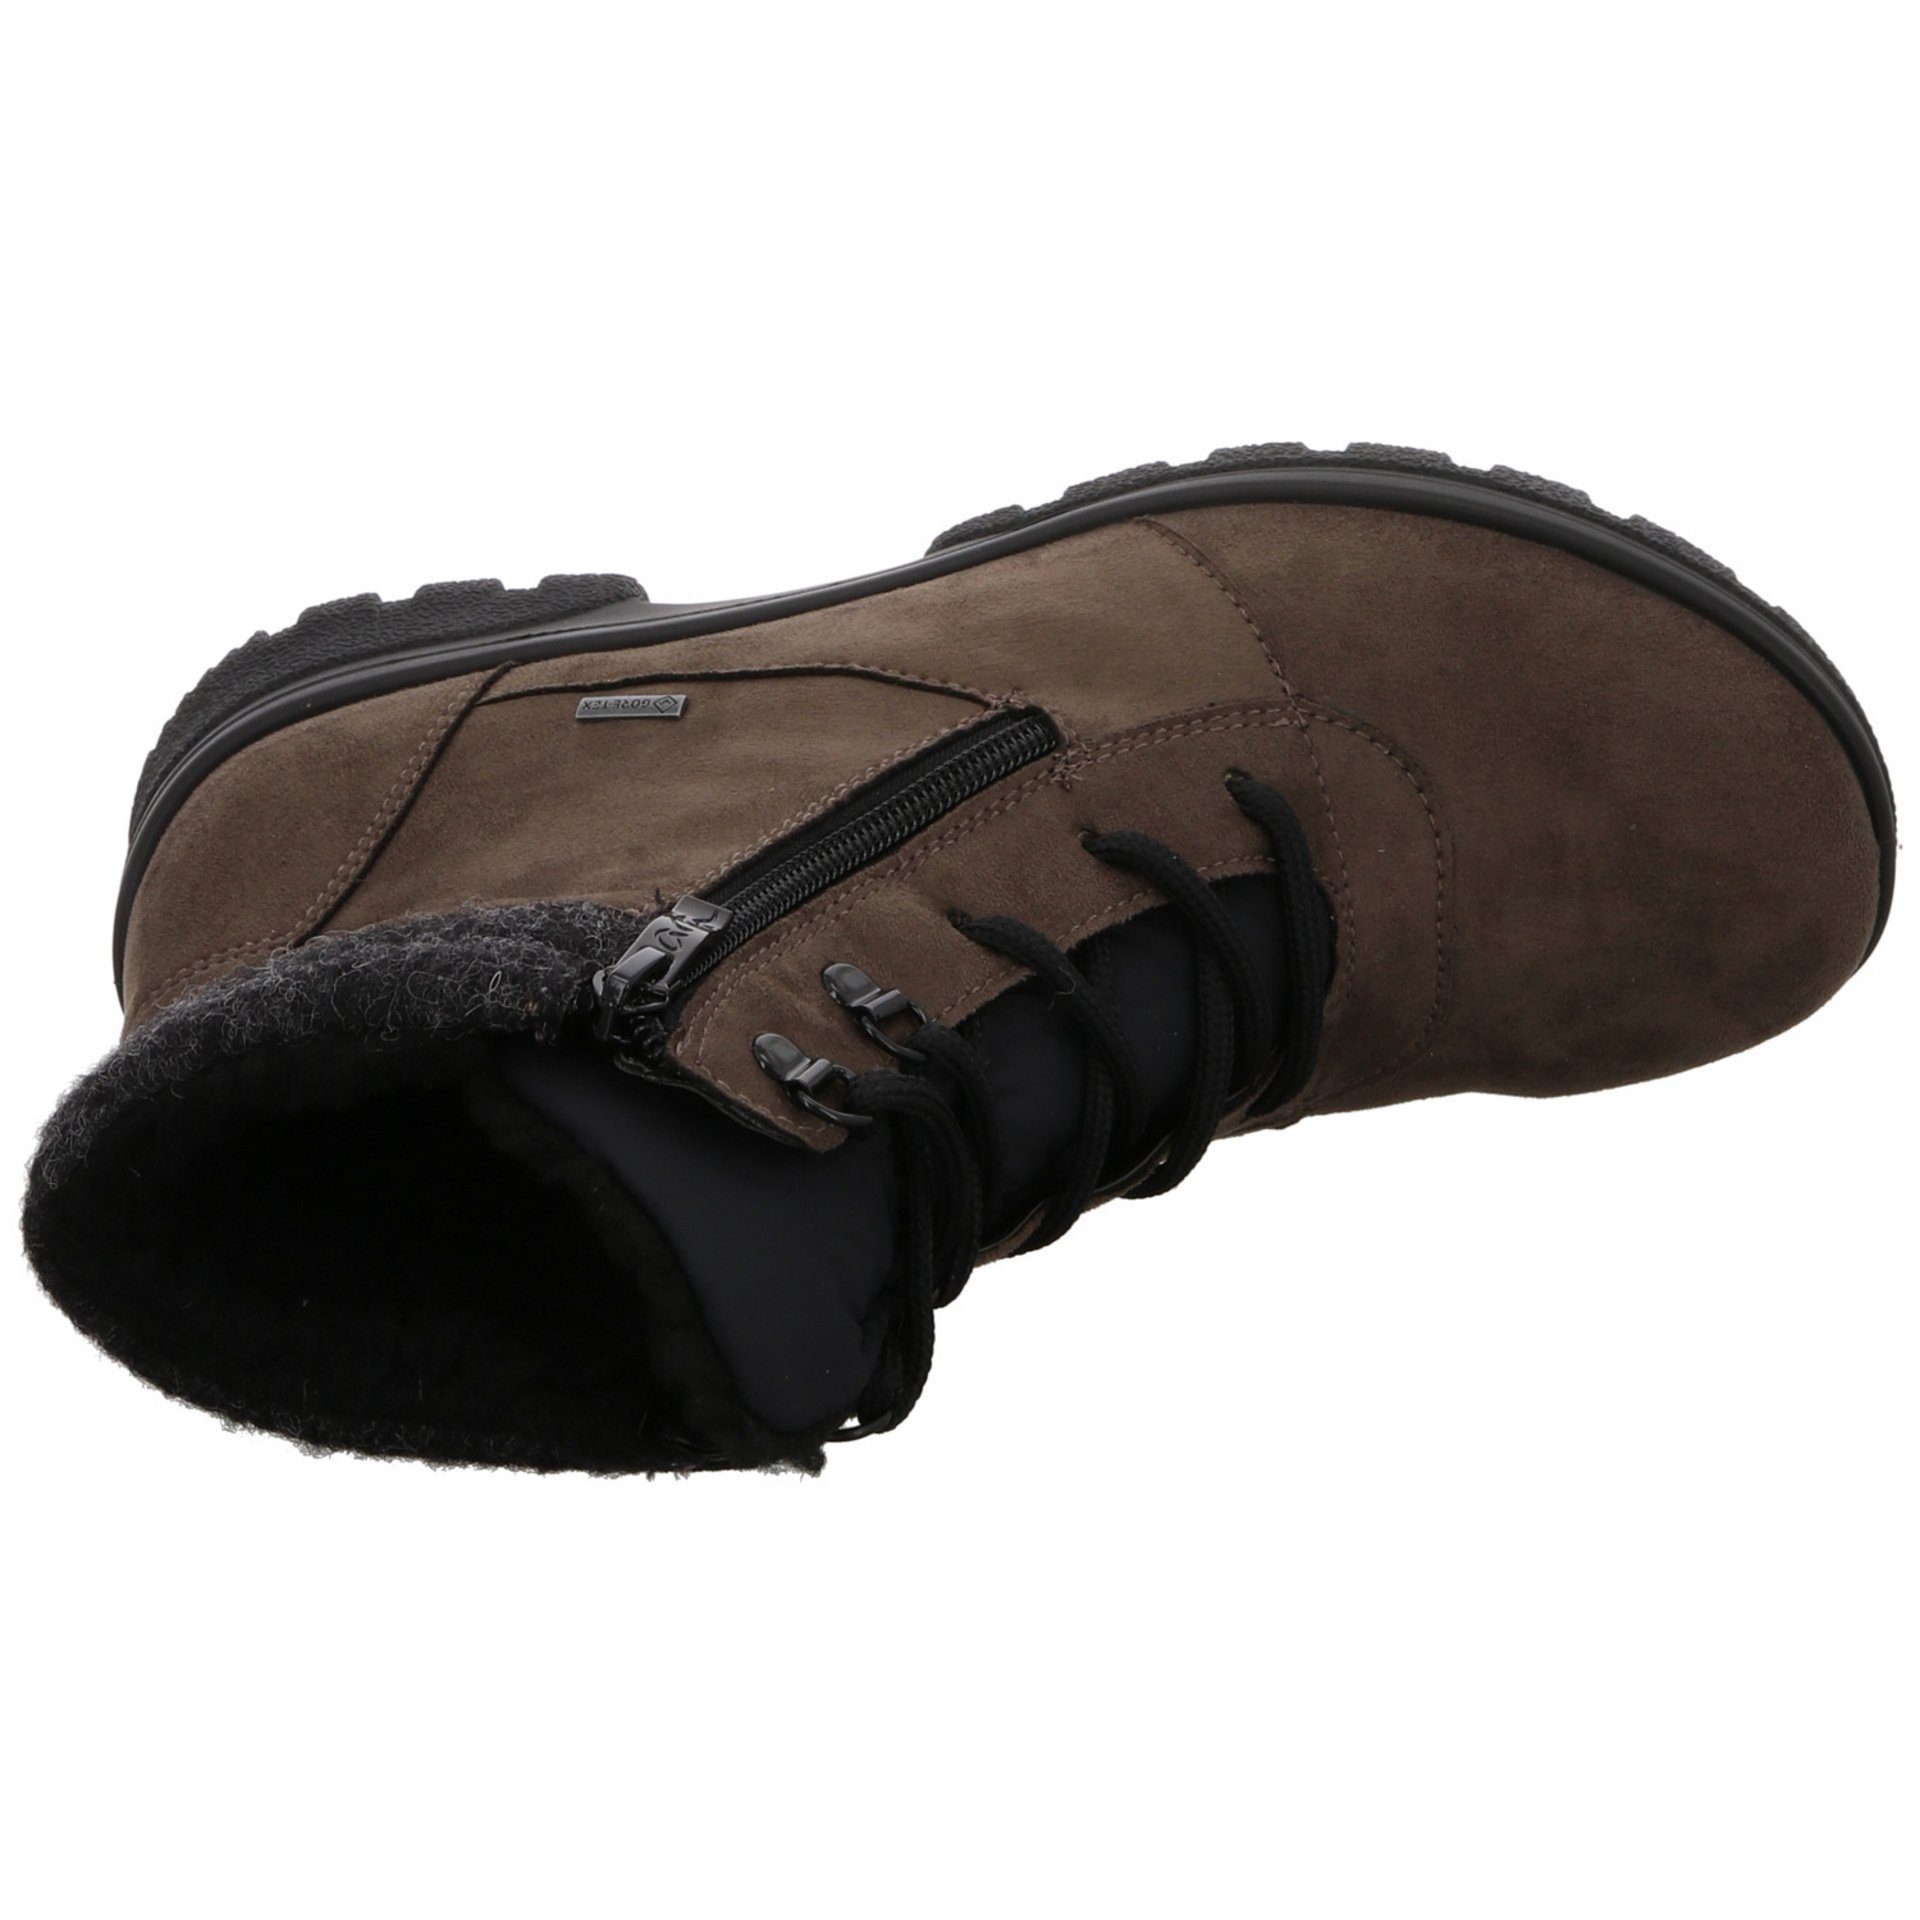 Ara Damen Snowboots Schuhe Saas-Fee Leder-/Textilkombination taiga/schwarz Boots Snowboots